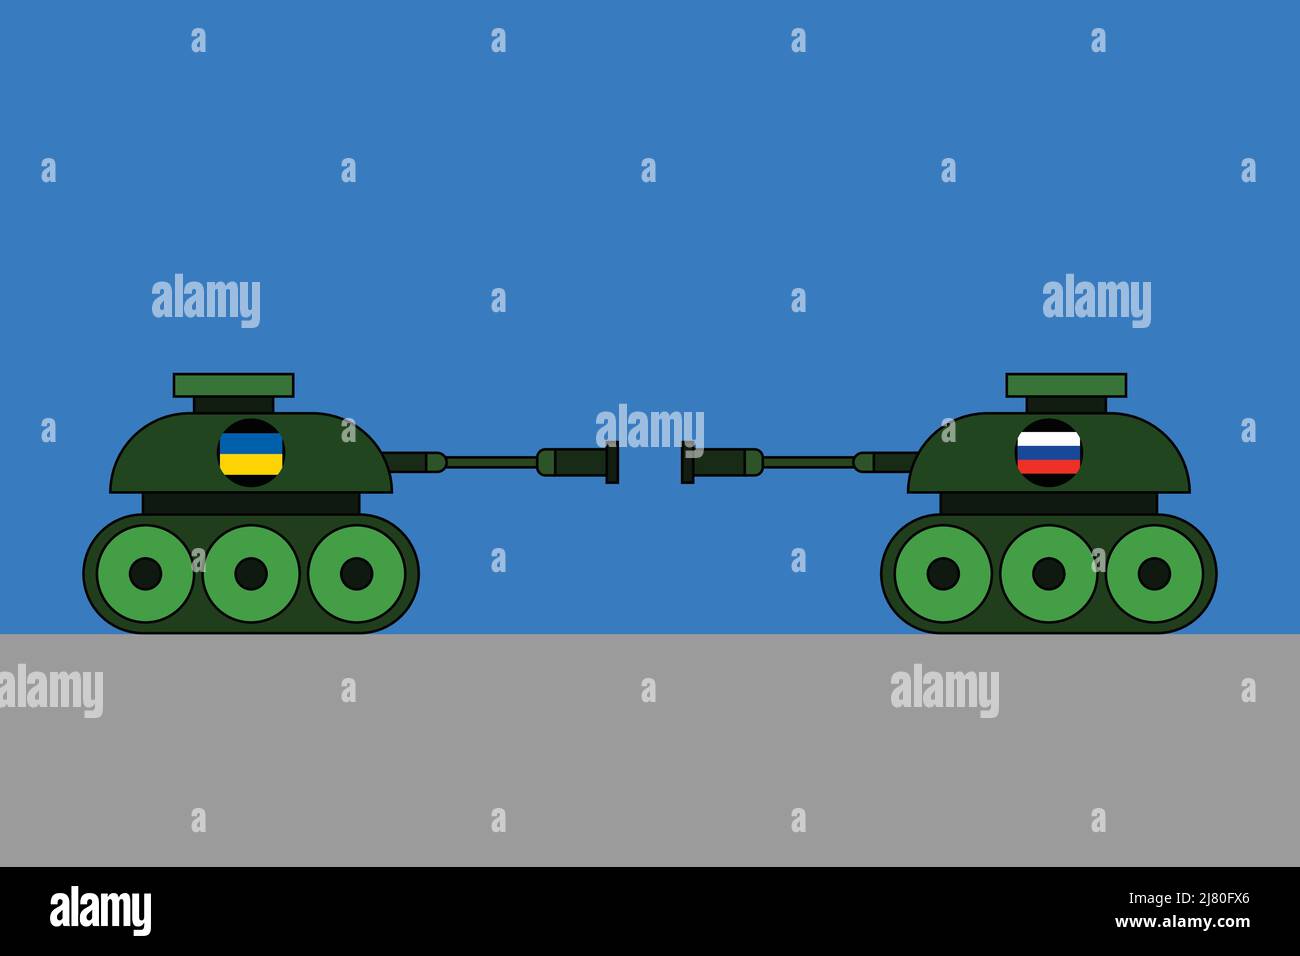 Tank ukrainien contre russe - illustration du vecteur de conflit russo-ukrainien Illustration de Vecteur